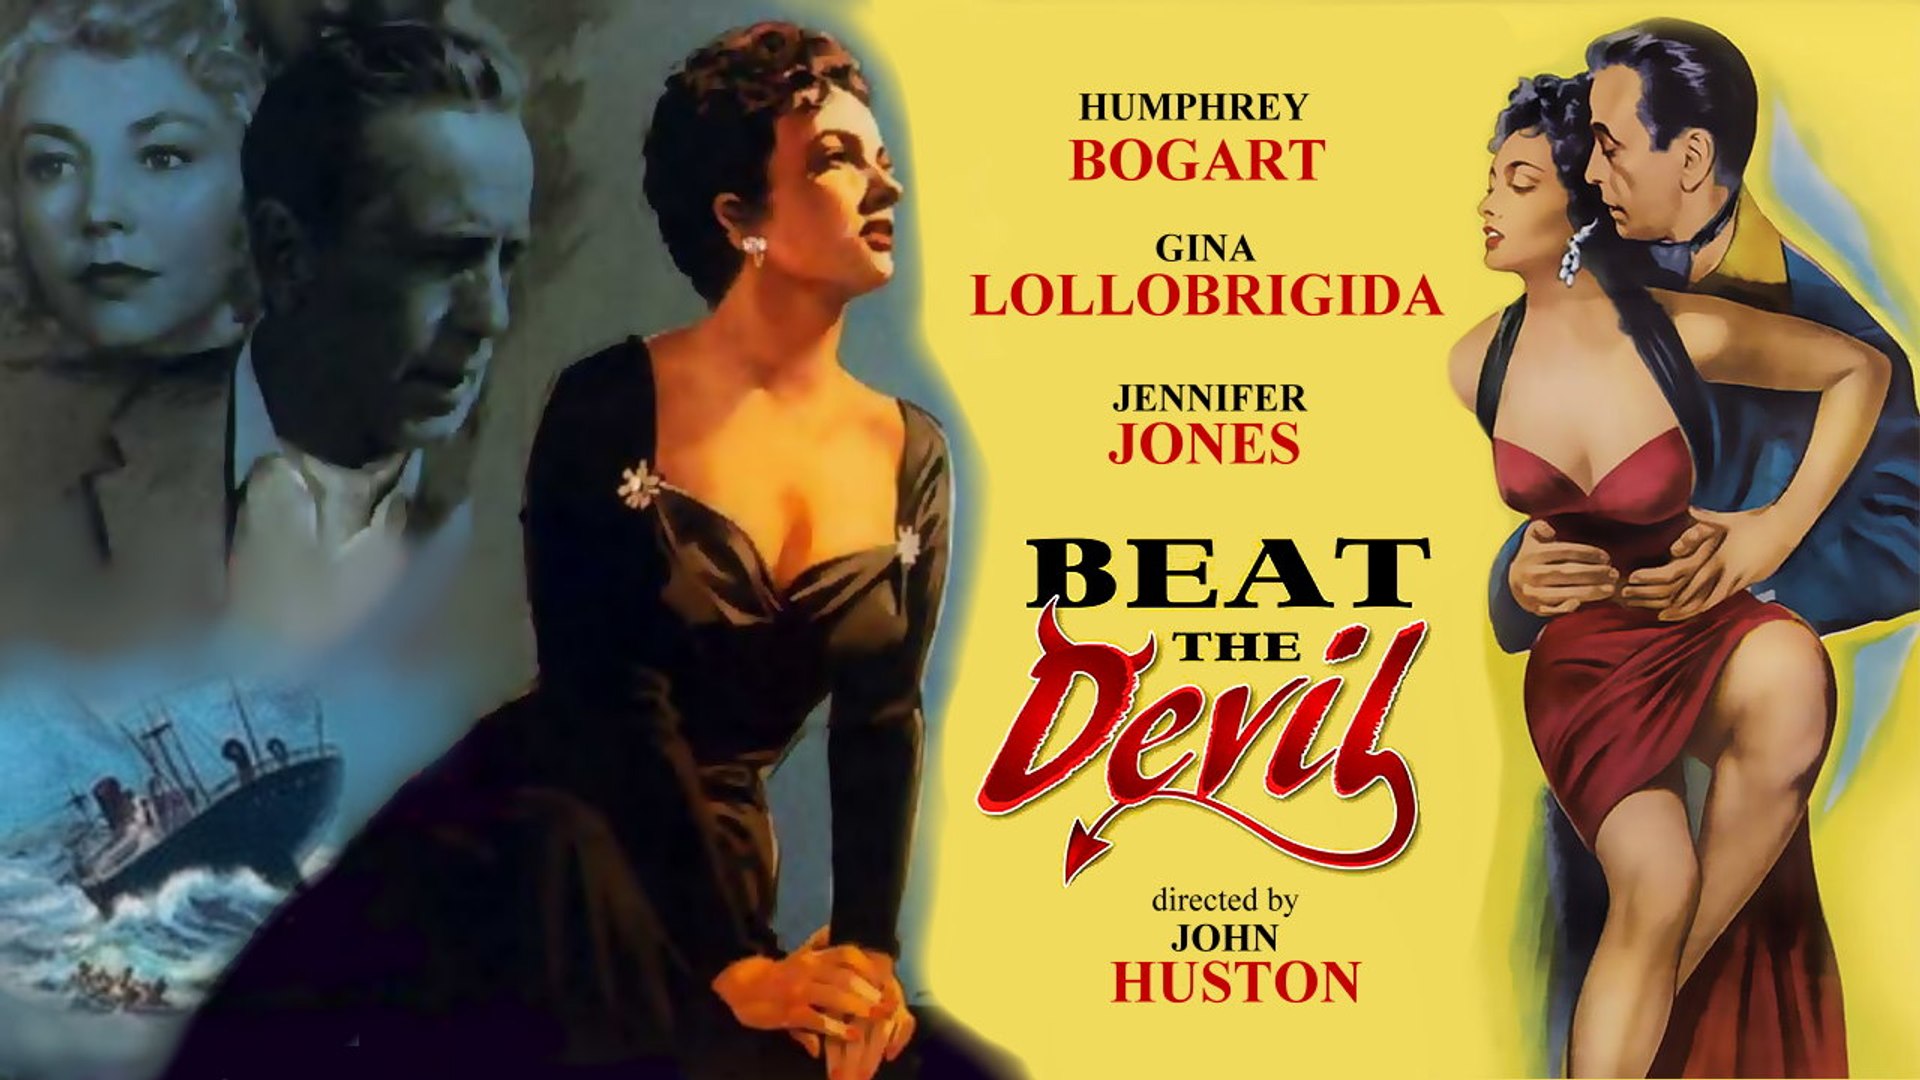 Beat the Devil (H. Bogart - G. Lollobrigida, 1953) HD - Video Dailymotion